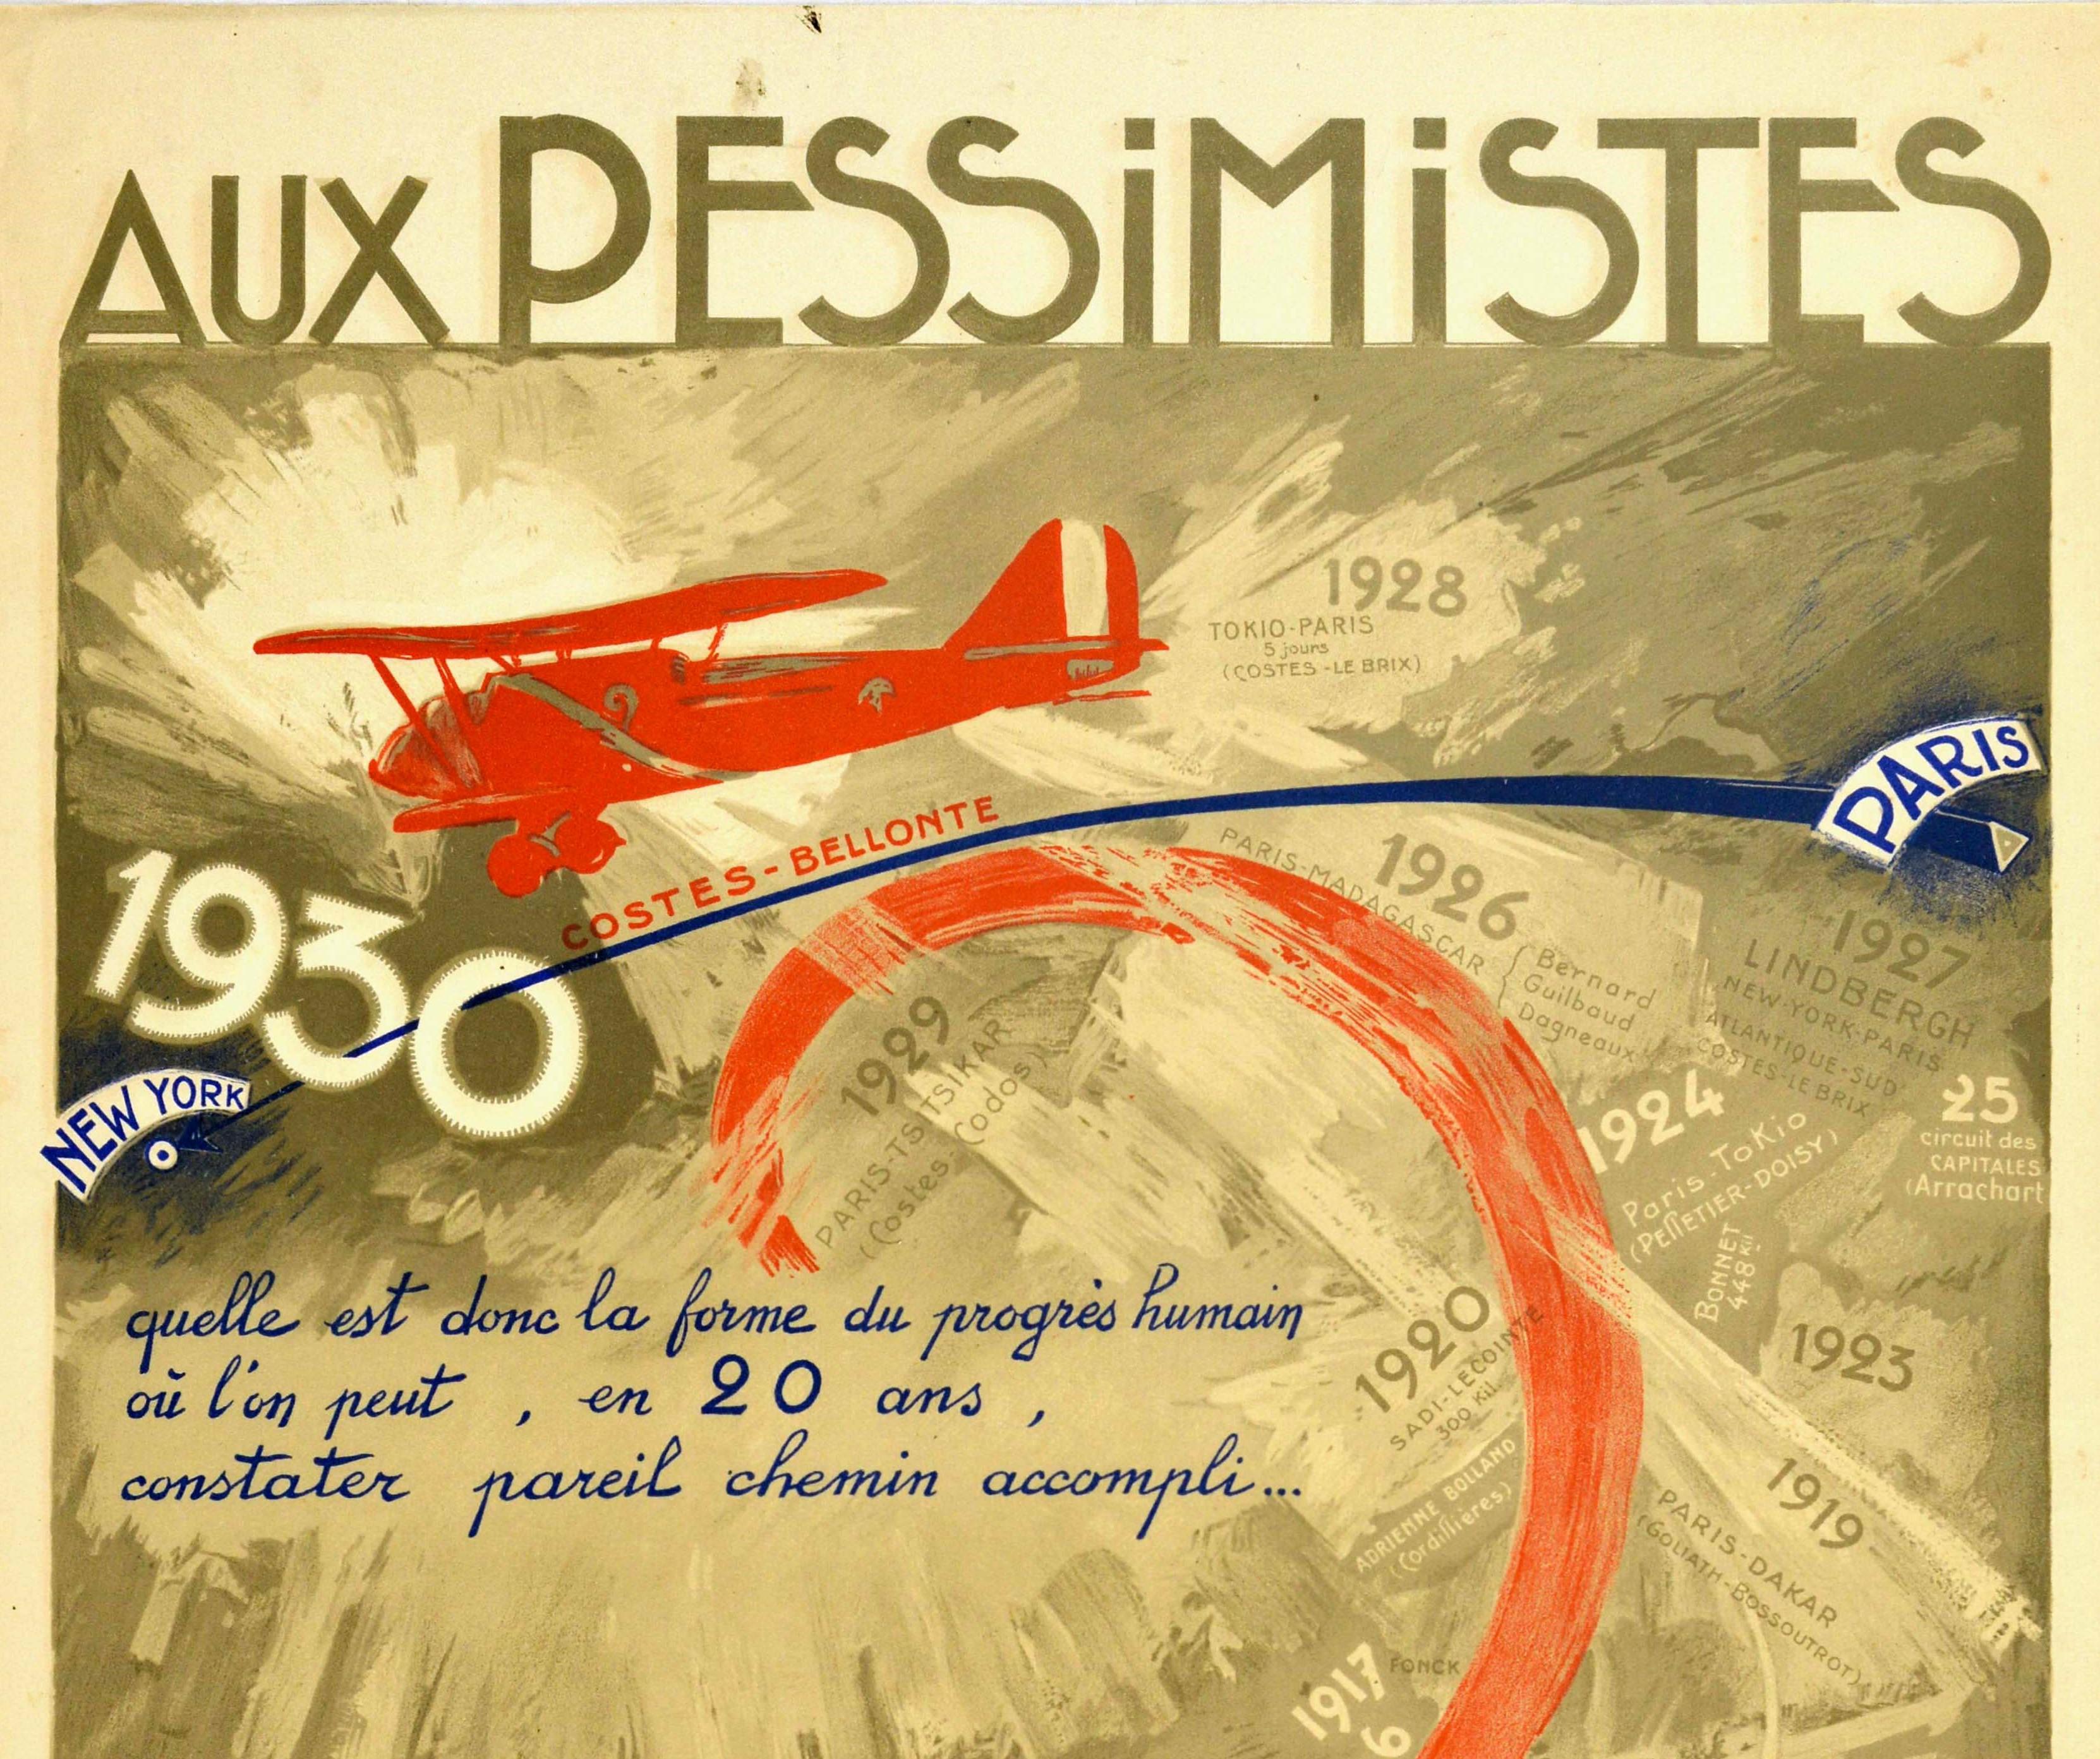 Original Vintage Poster Aux Pessimistes Paris To New York Plane Aviation Record - Print by Georges Villa